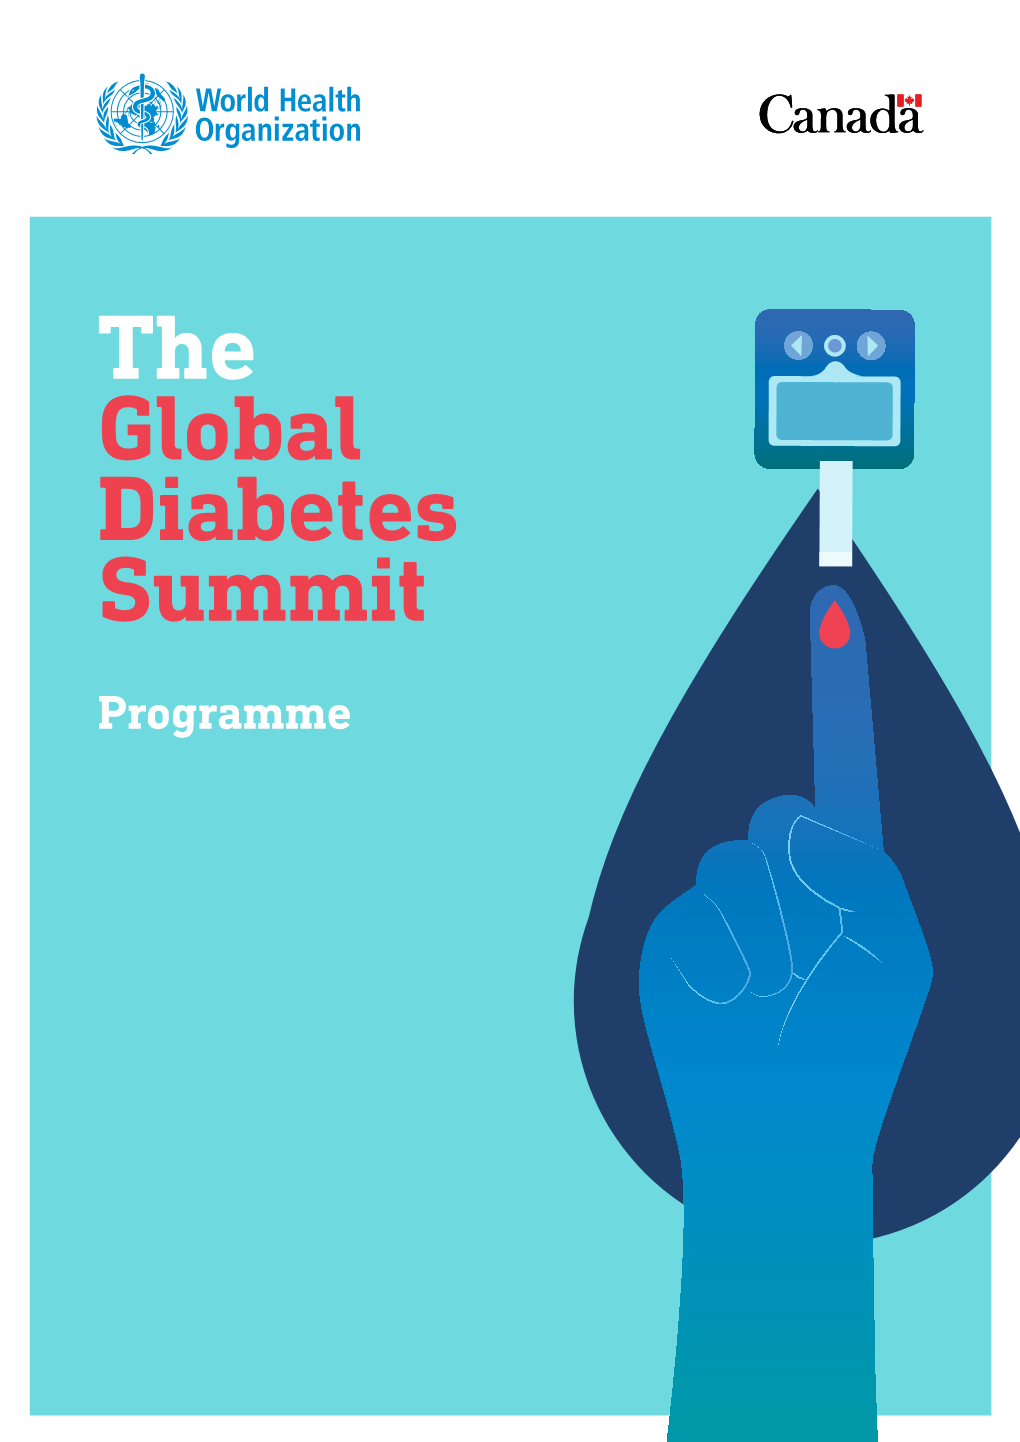 The Global Diabetes Summit